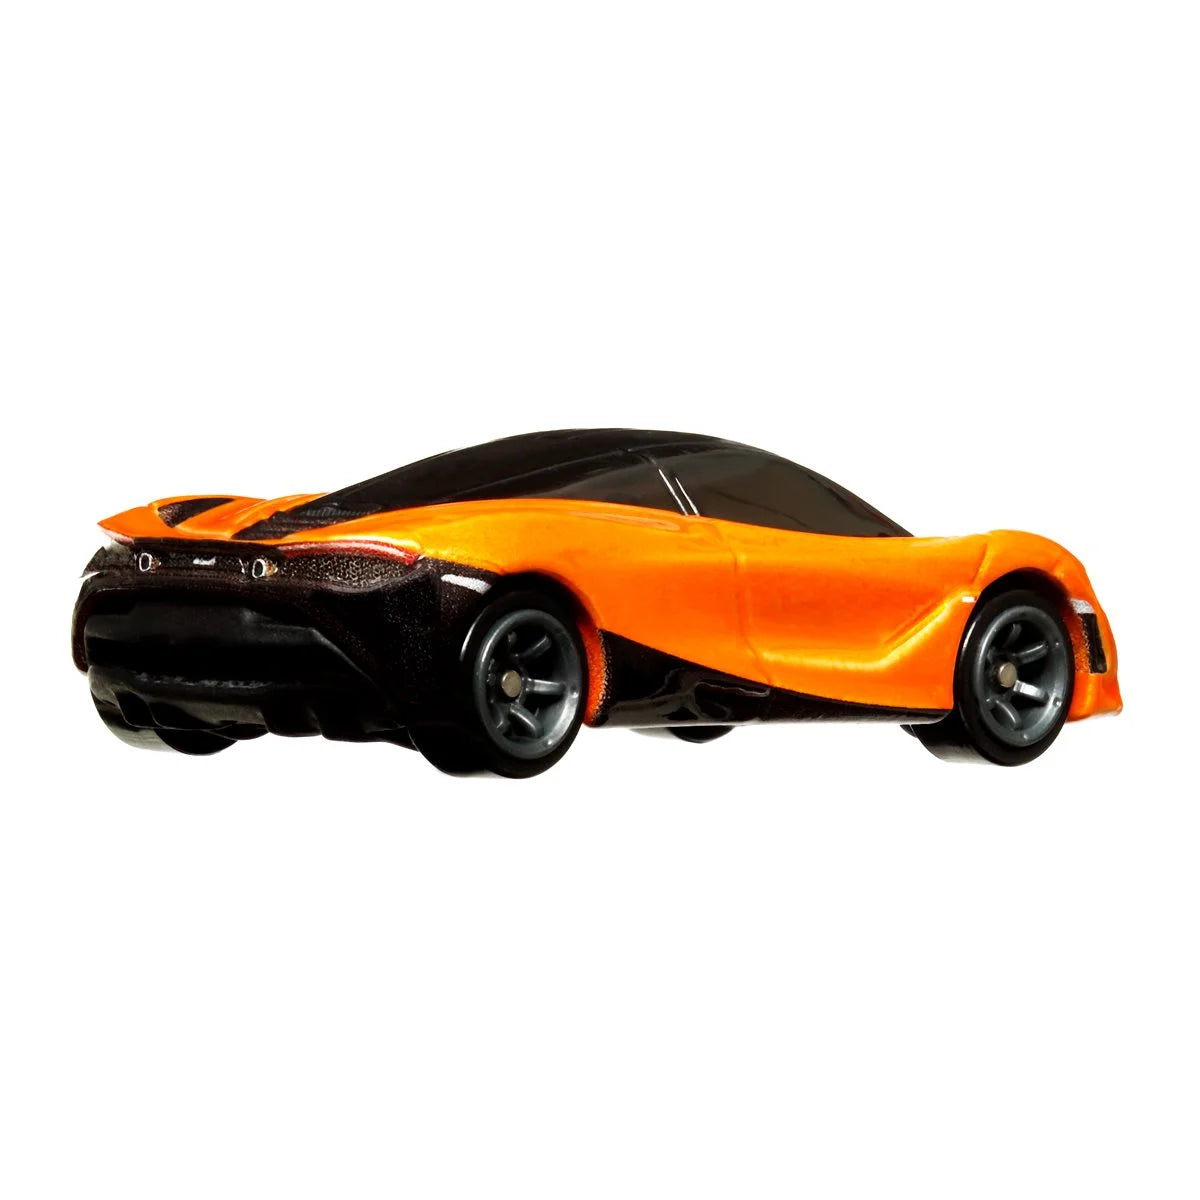 Hot Wheels Car Culture Speed Machines Mix 1 McLaren 720S - Heretoserveyou